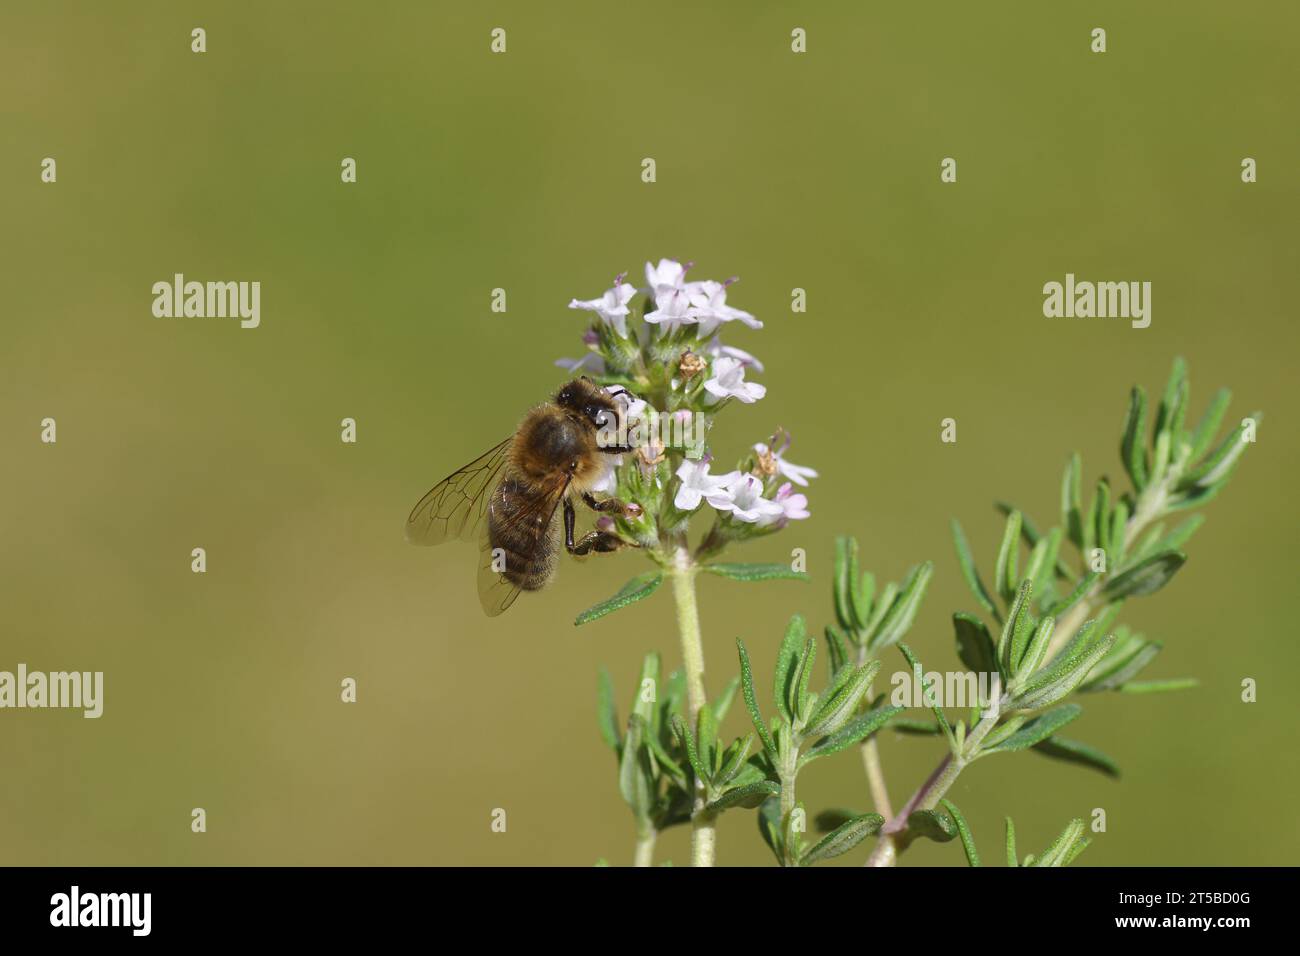 Western honey bee or European honey bee (Apis mellifera) on flowers of Thyme (Thymus), Family Lamiaceae. Spring, may. Dutch garden. Stock Photo